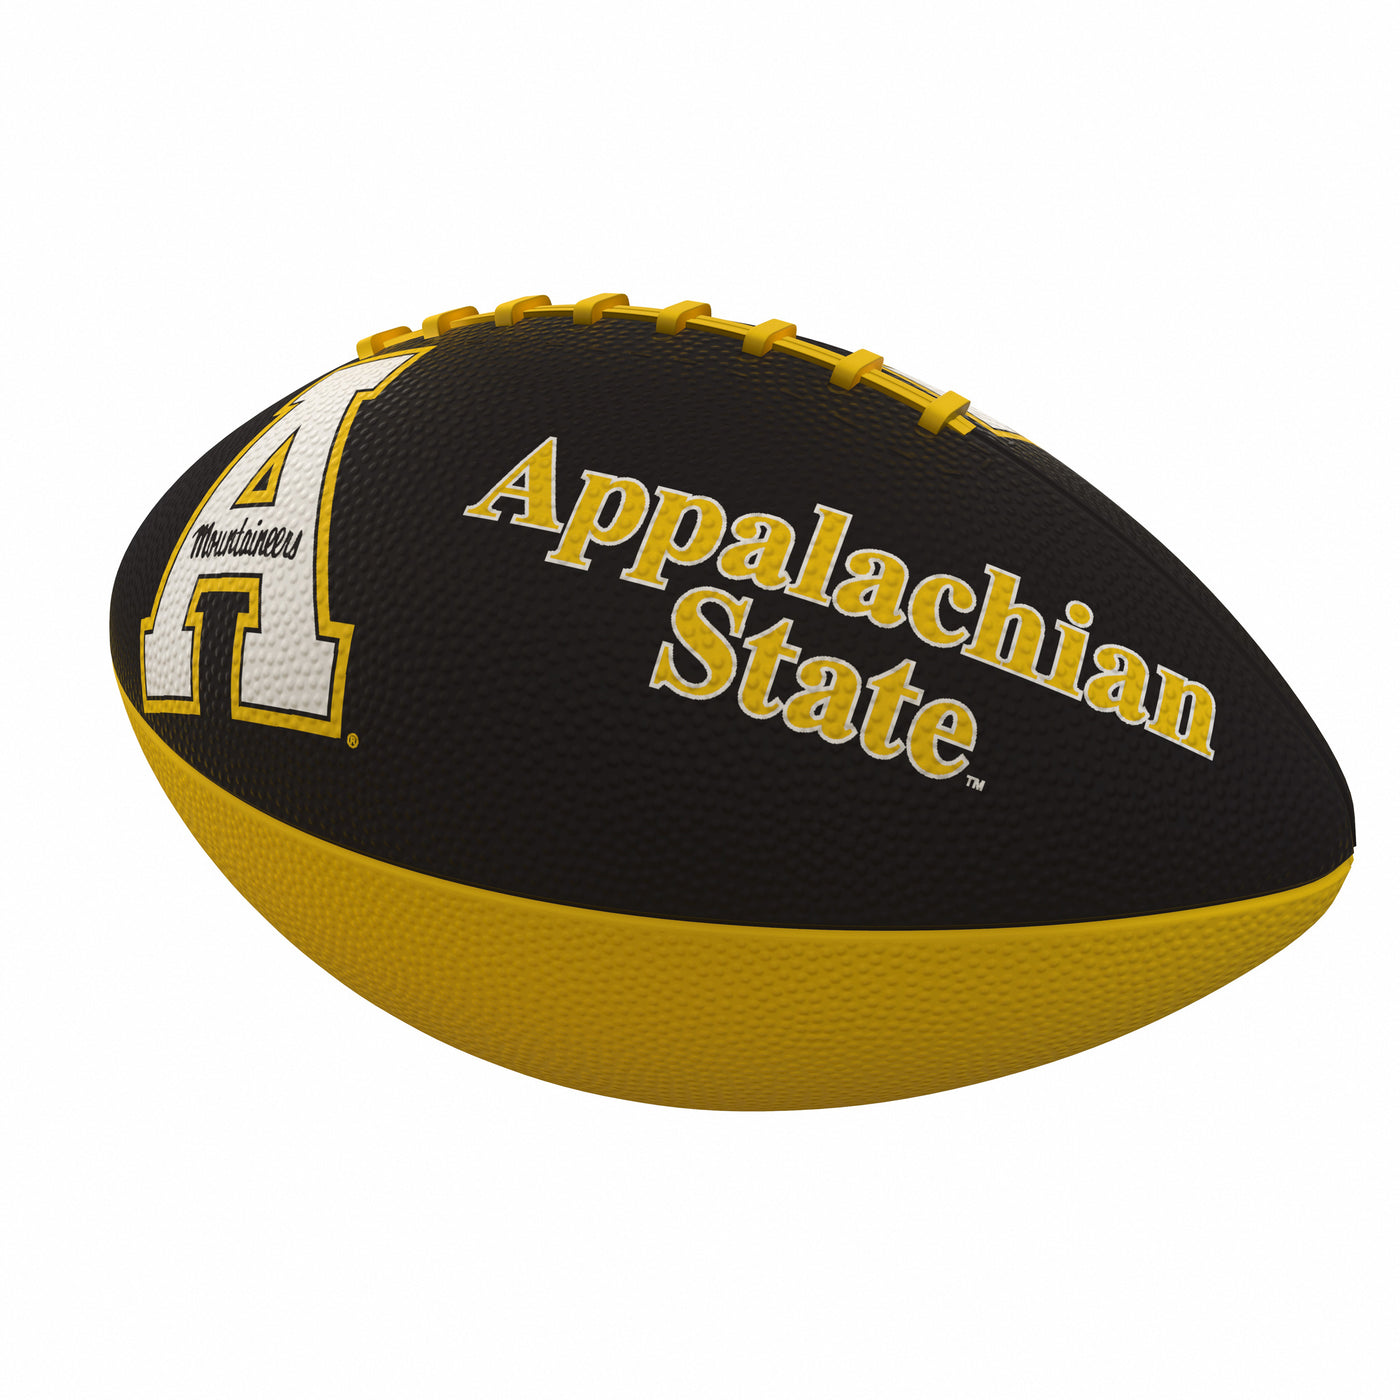 Appalachian State Combo Logo Junior-Size Rubber Football